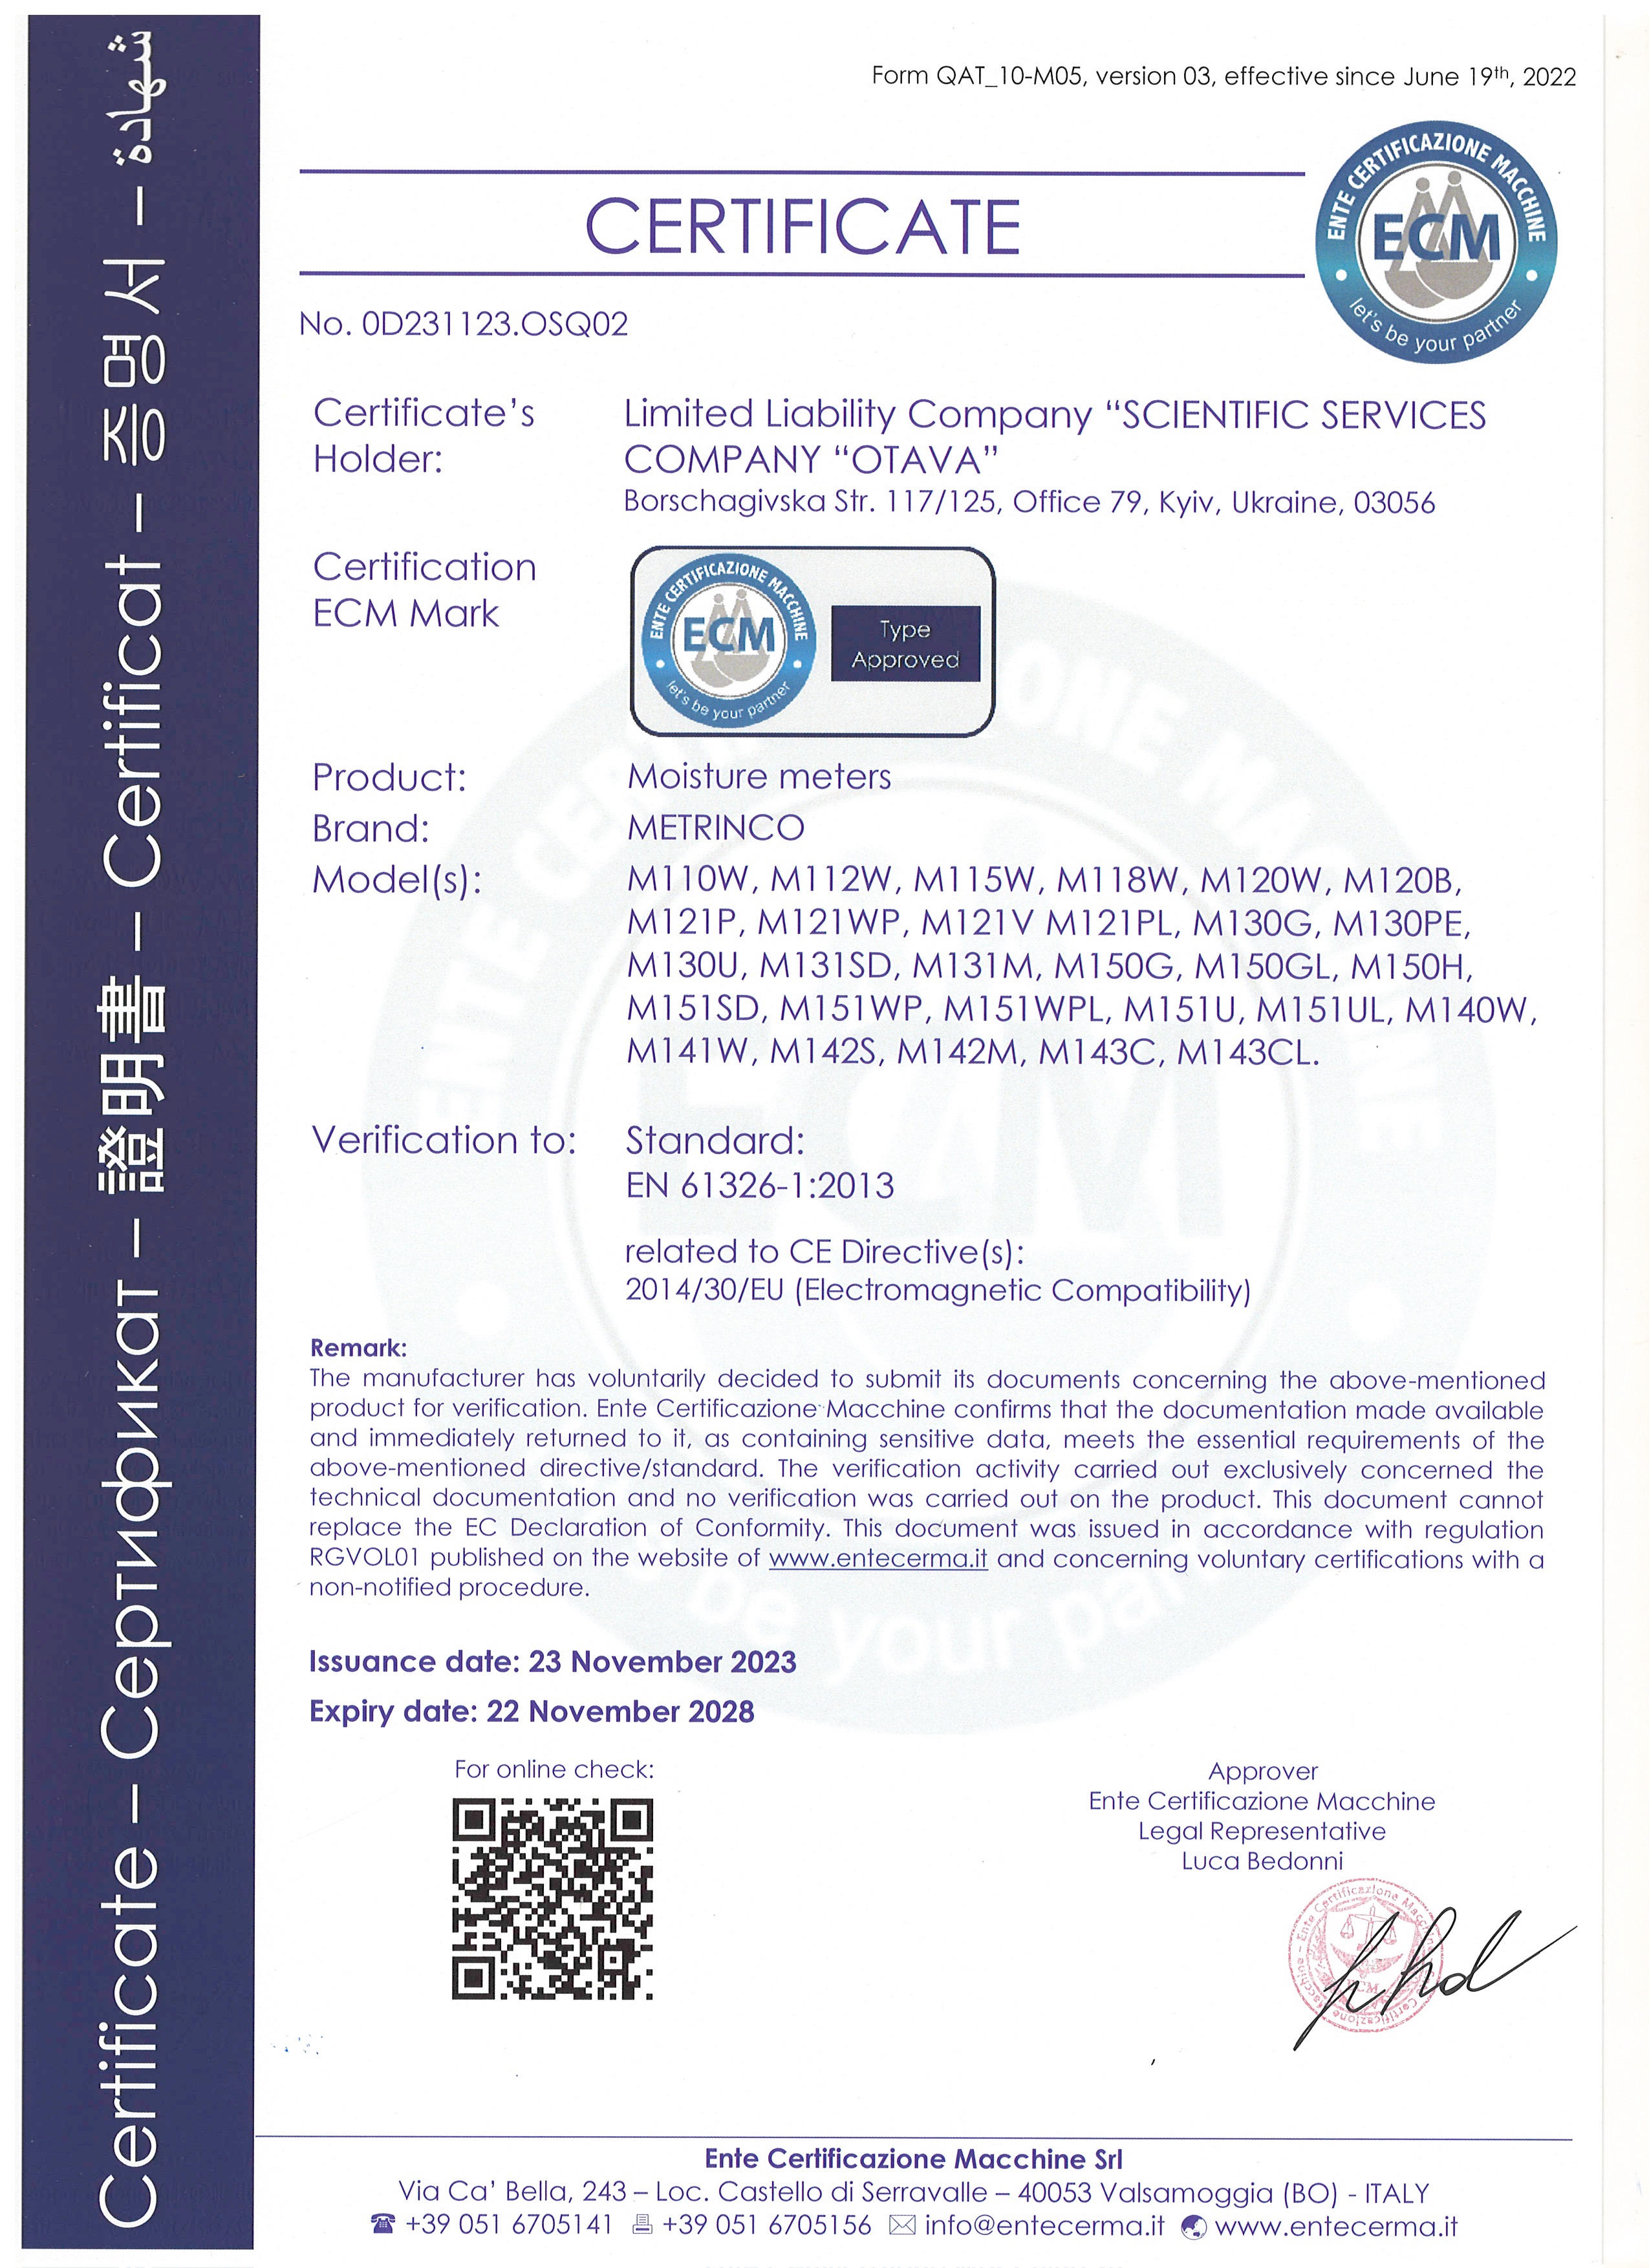 Metrinco Certificate